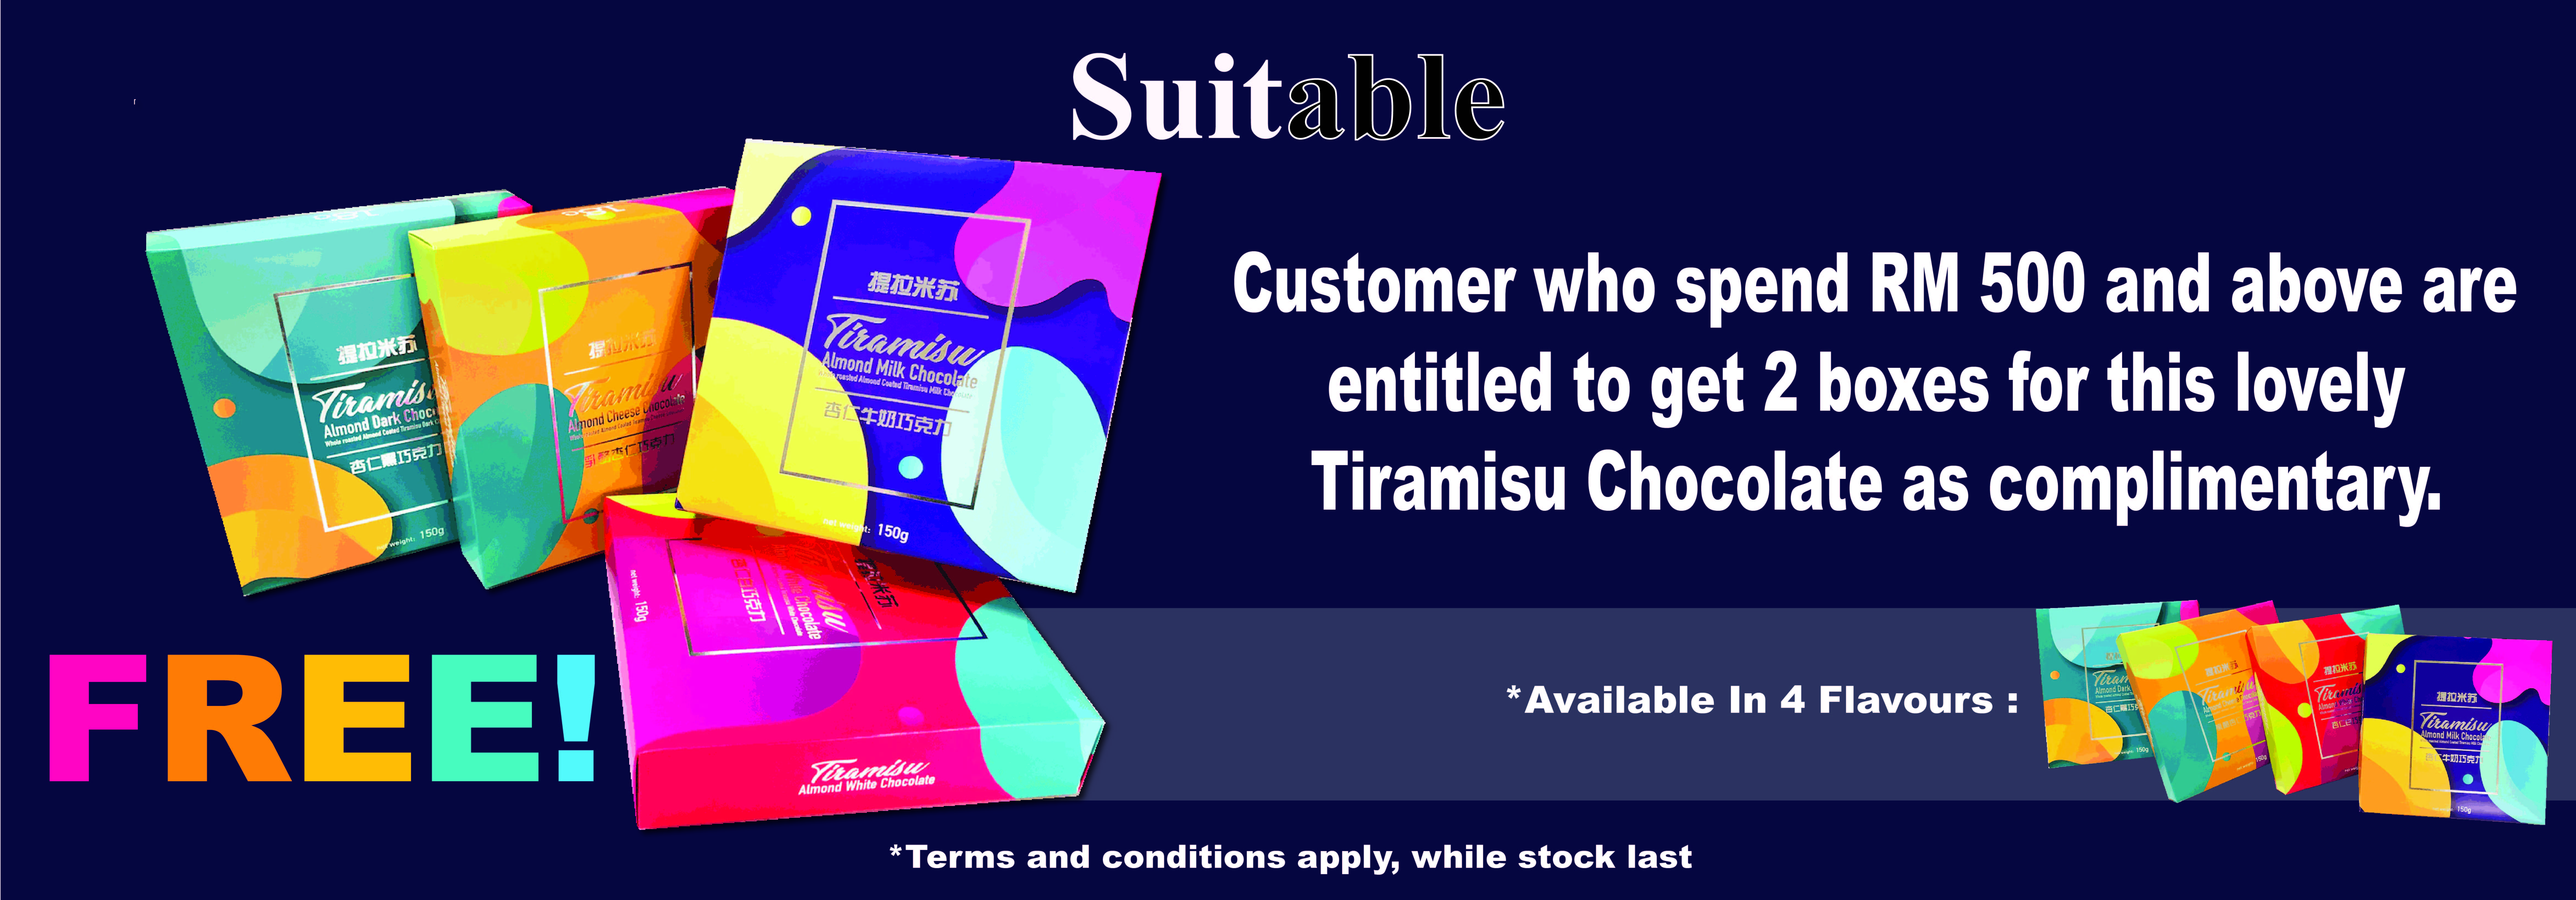 Suitable Member Free Gift Tiramisu Chocolate